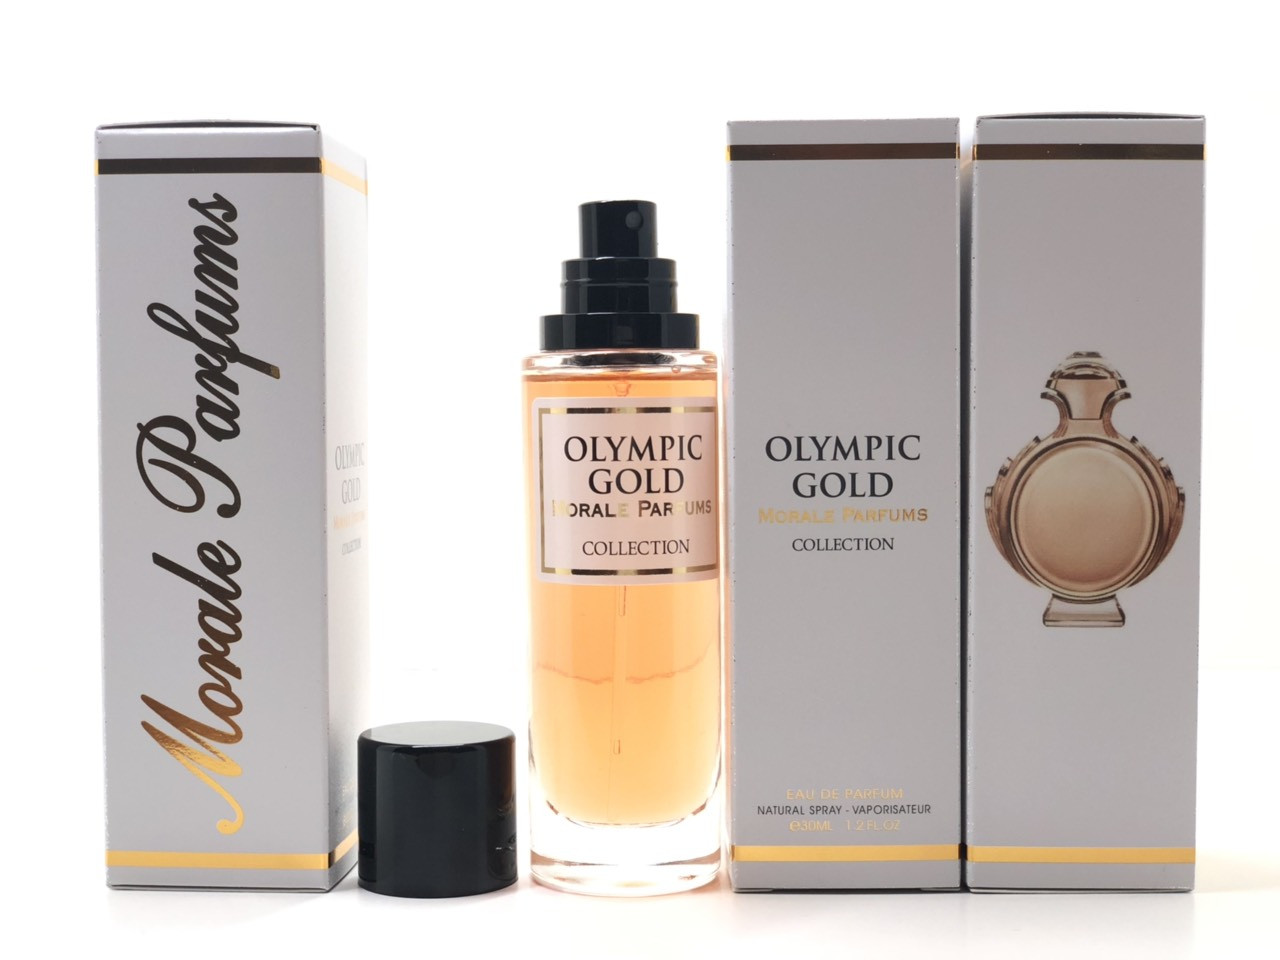 Жіночий аромат Olympic Gold Morale Parfums (Олімпік Голд Морал Парфум) 30 мл